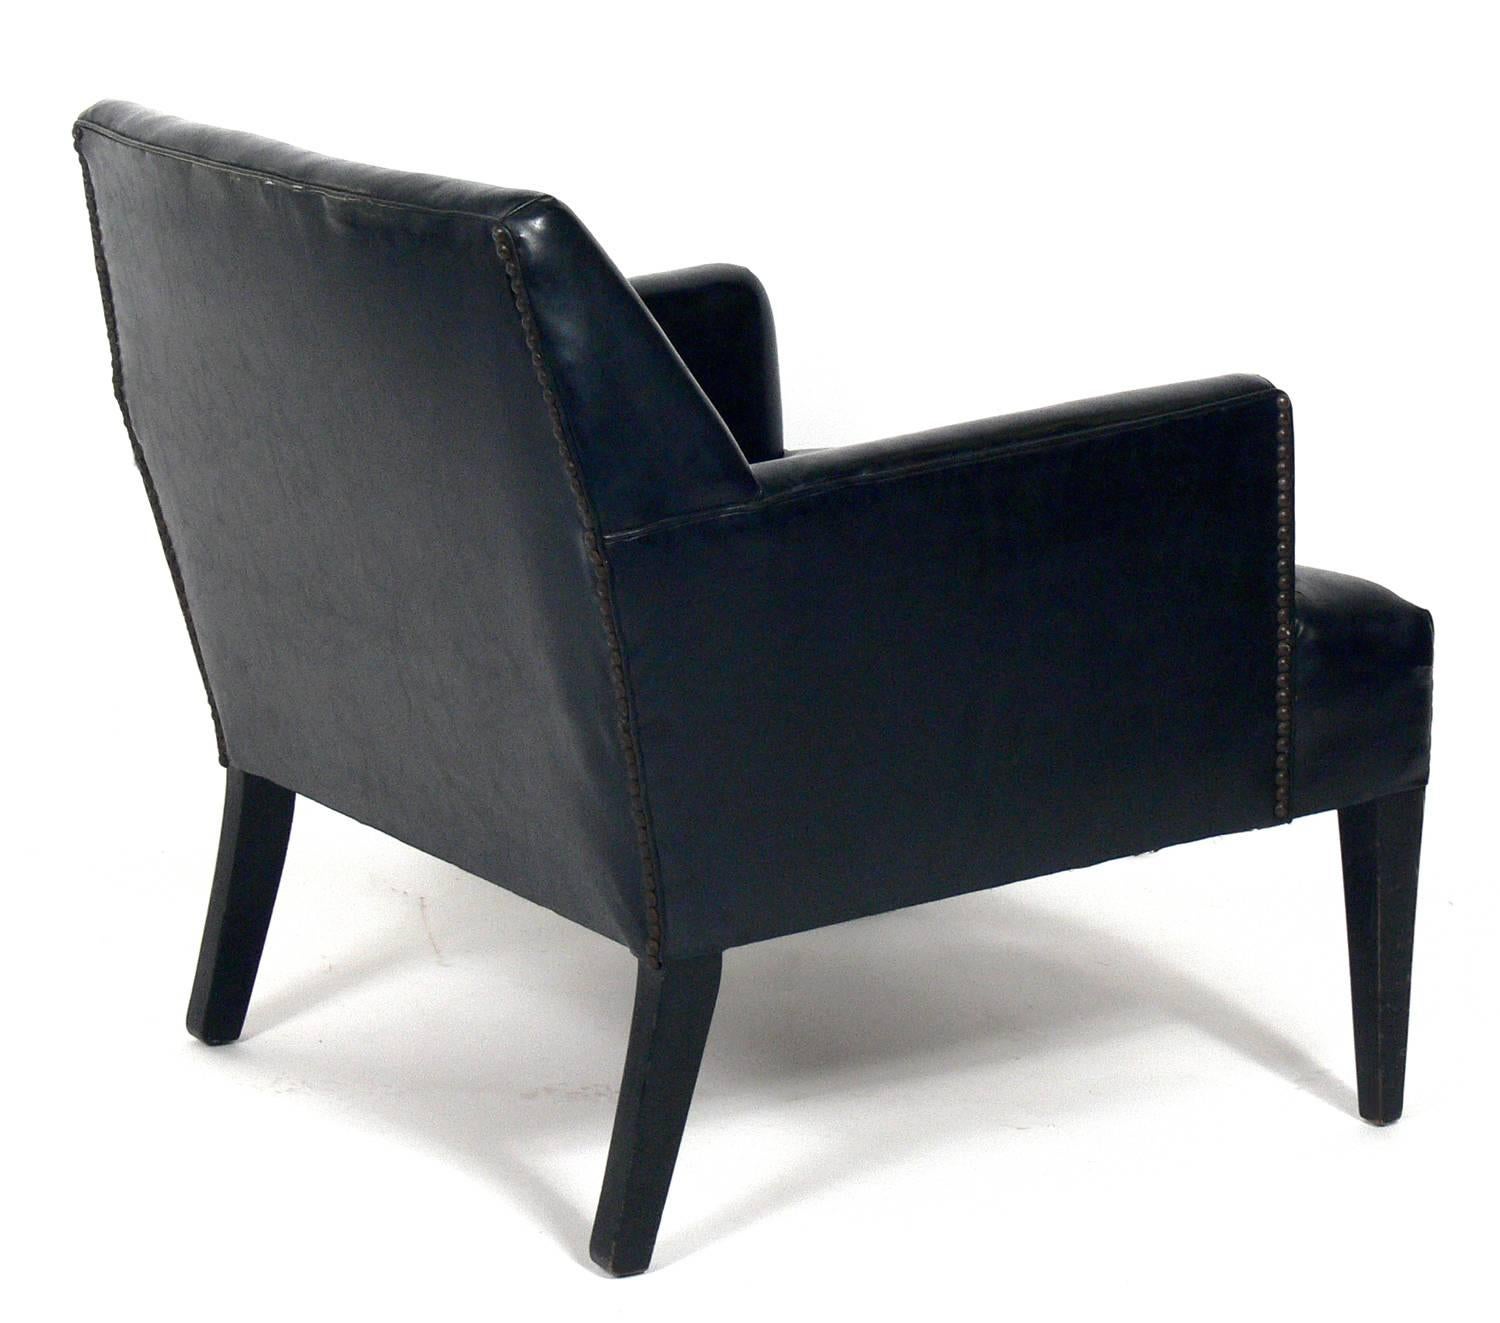 American Angular Mid-Century Modern Lounge Chair